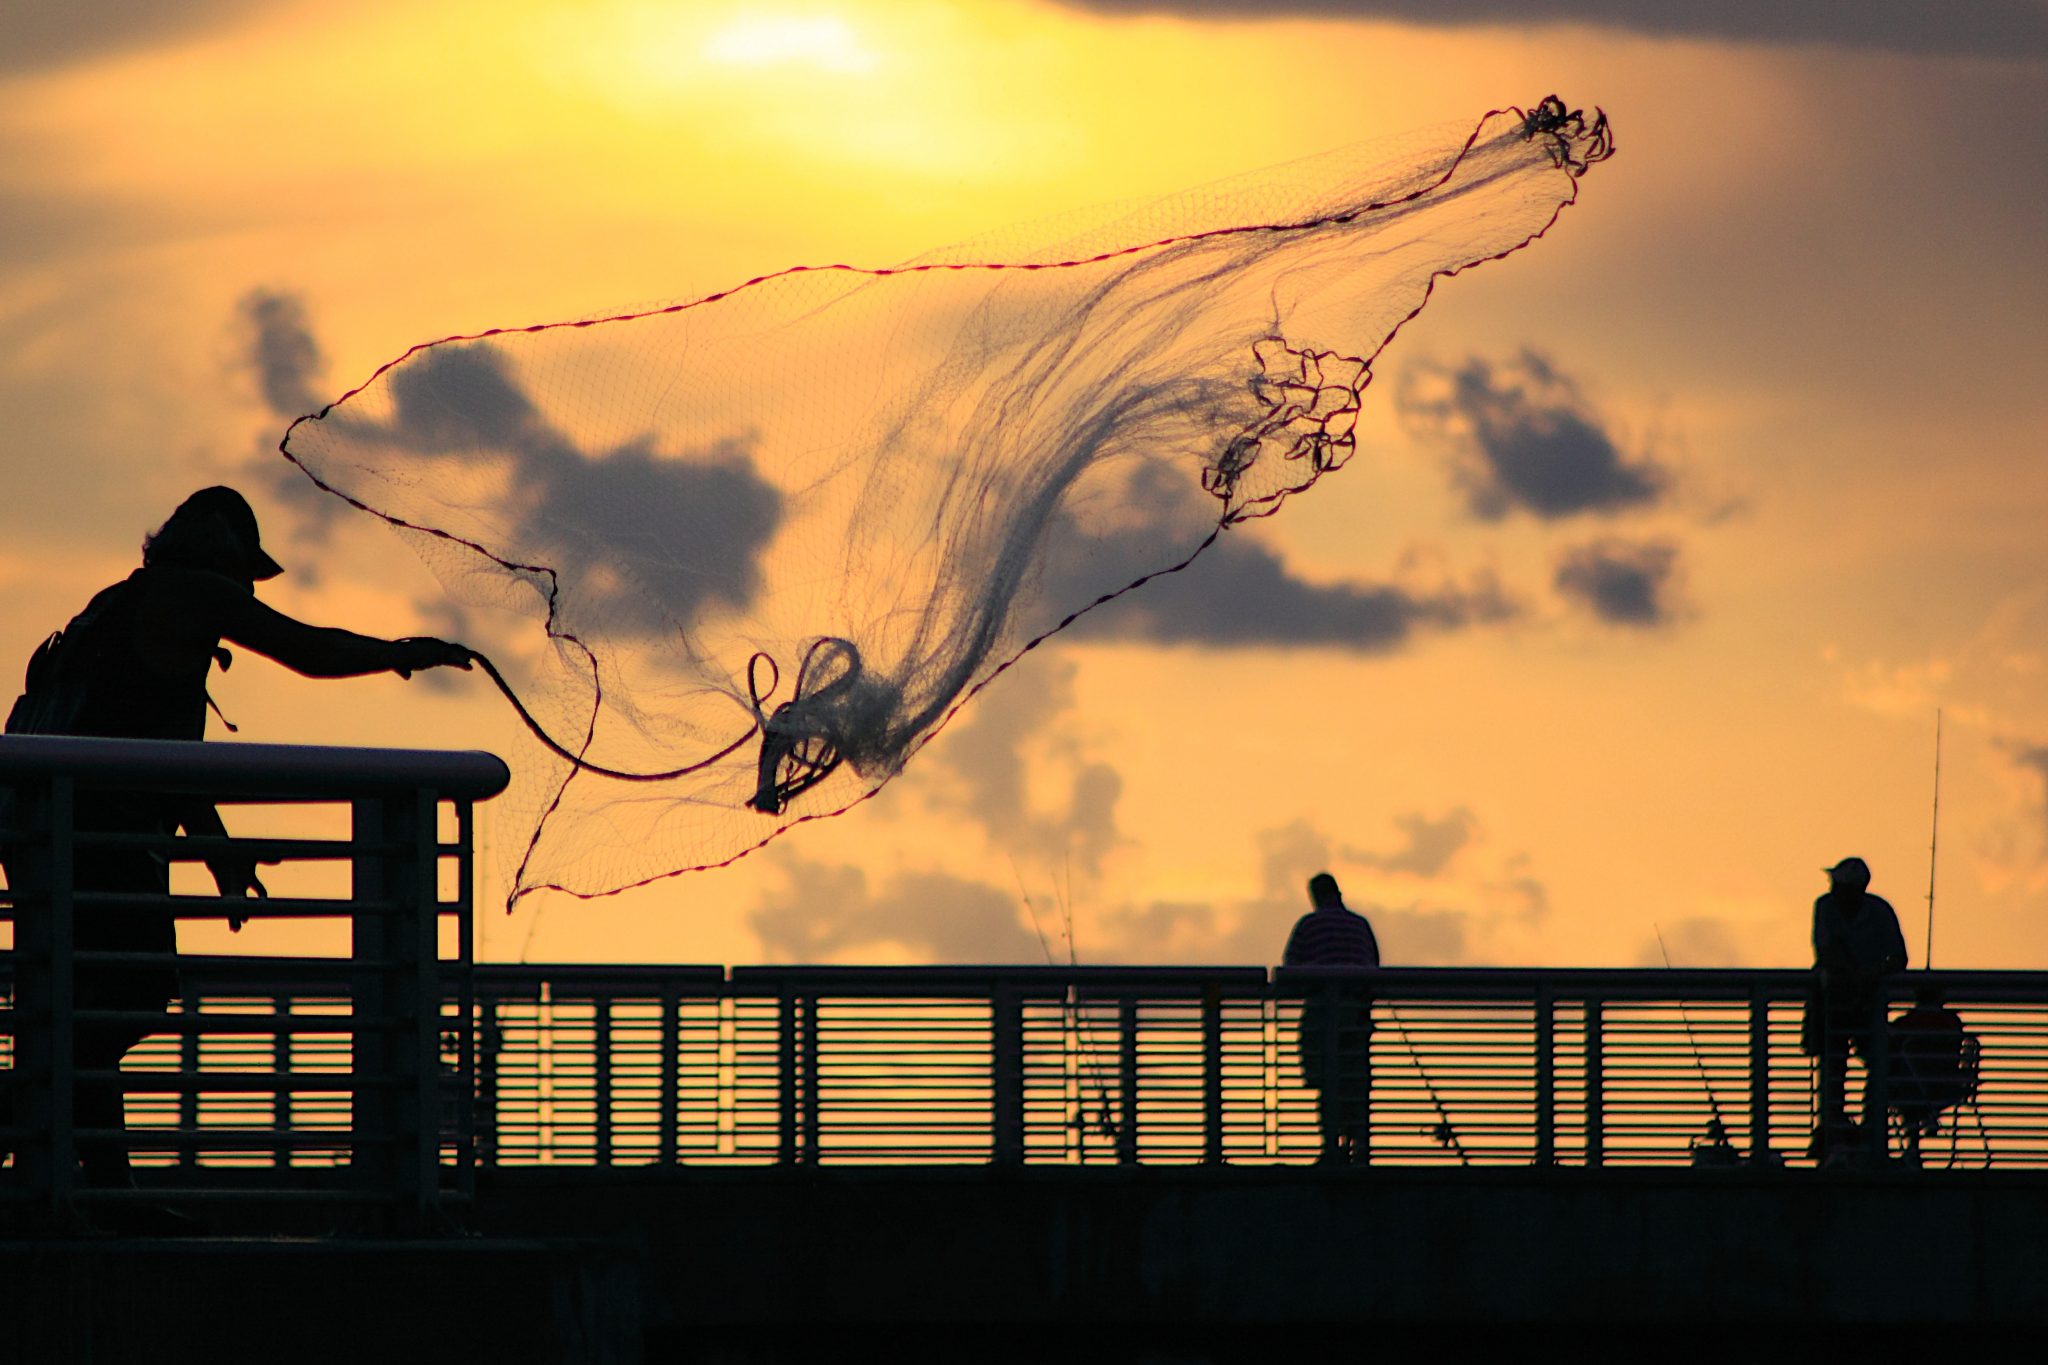 Fisherman casting a net during sunrise